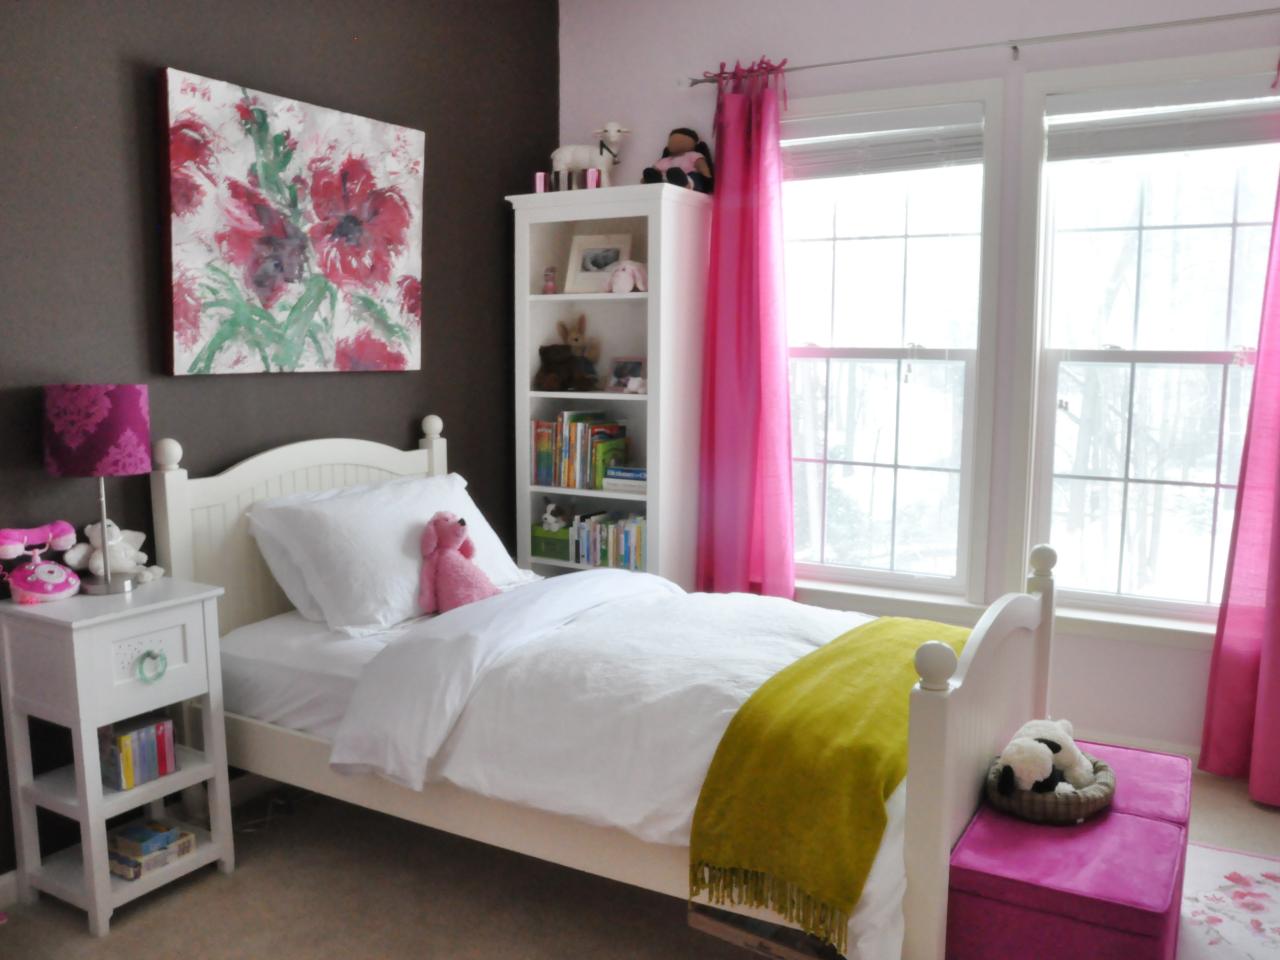 RMS_wenbenoit-chocolate-brown-hot-pink-girls-bedroom_s4x3.jpg.rend.hgtvcom.1280.960